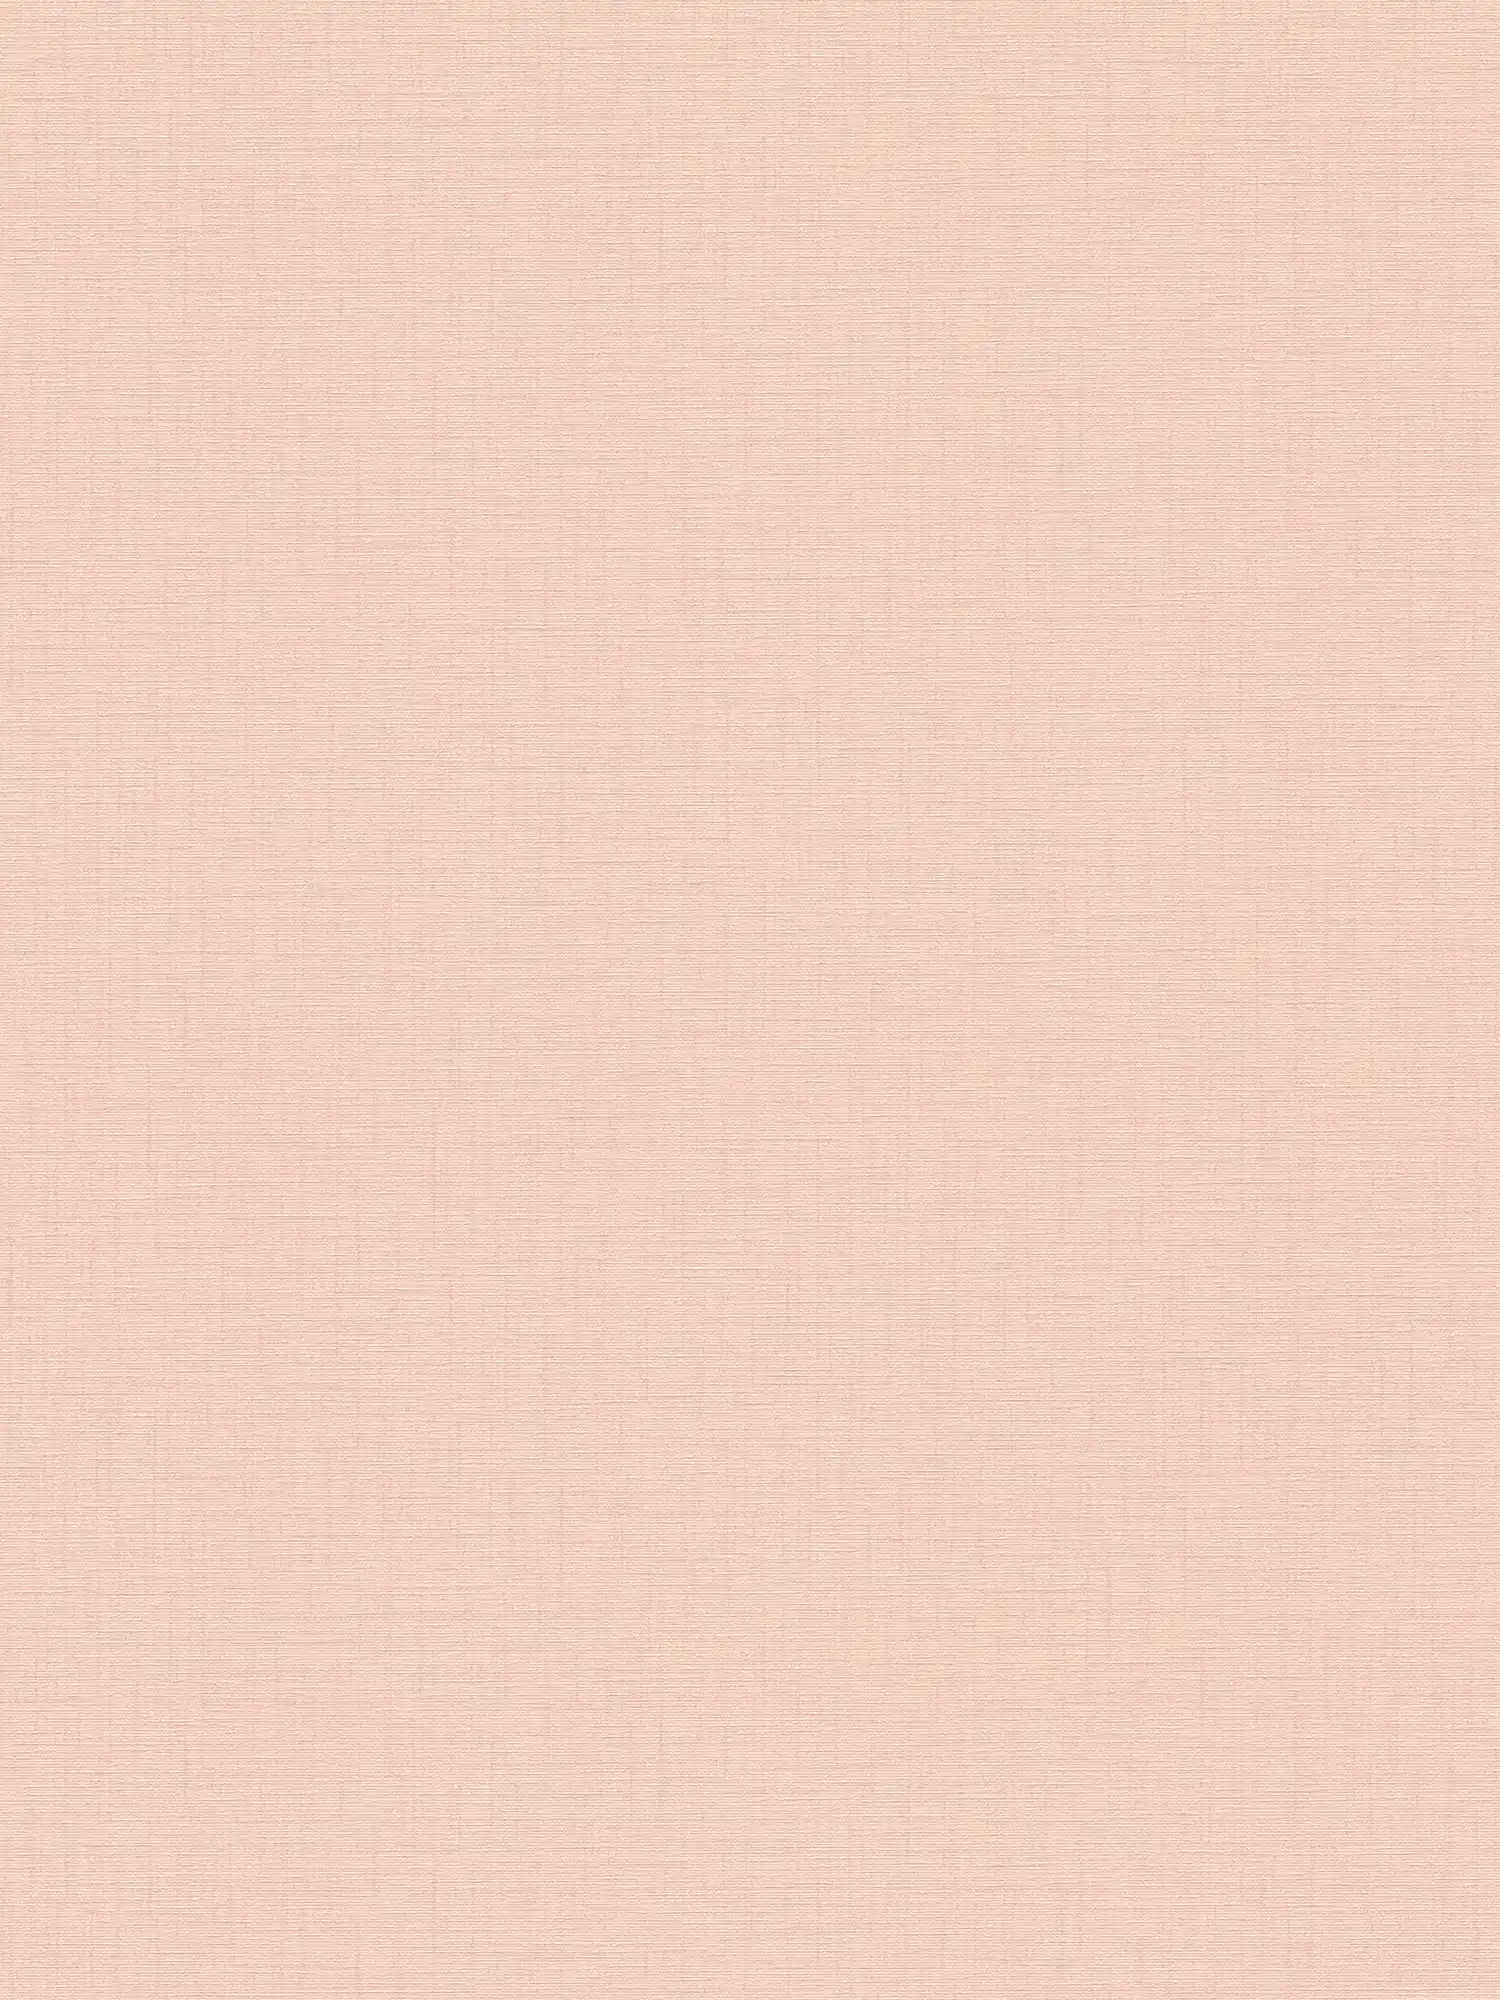 Pale pink wallpaper plain with linen texture - pink
